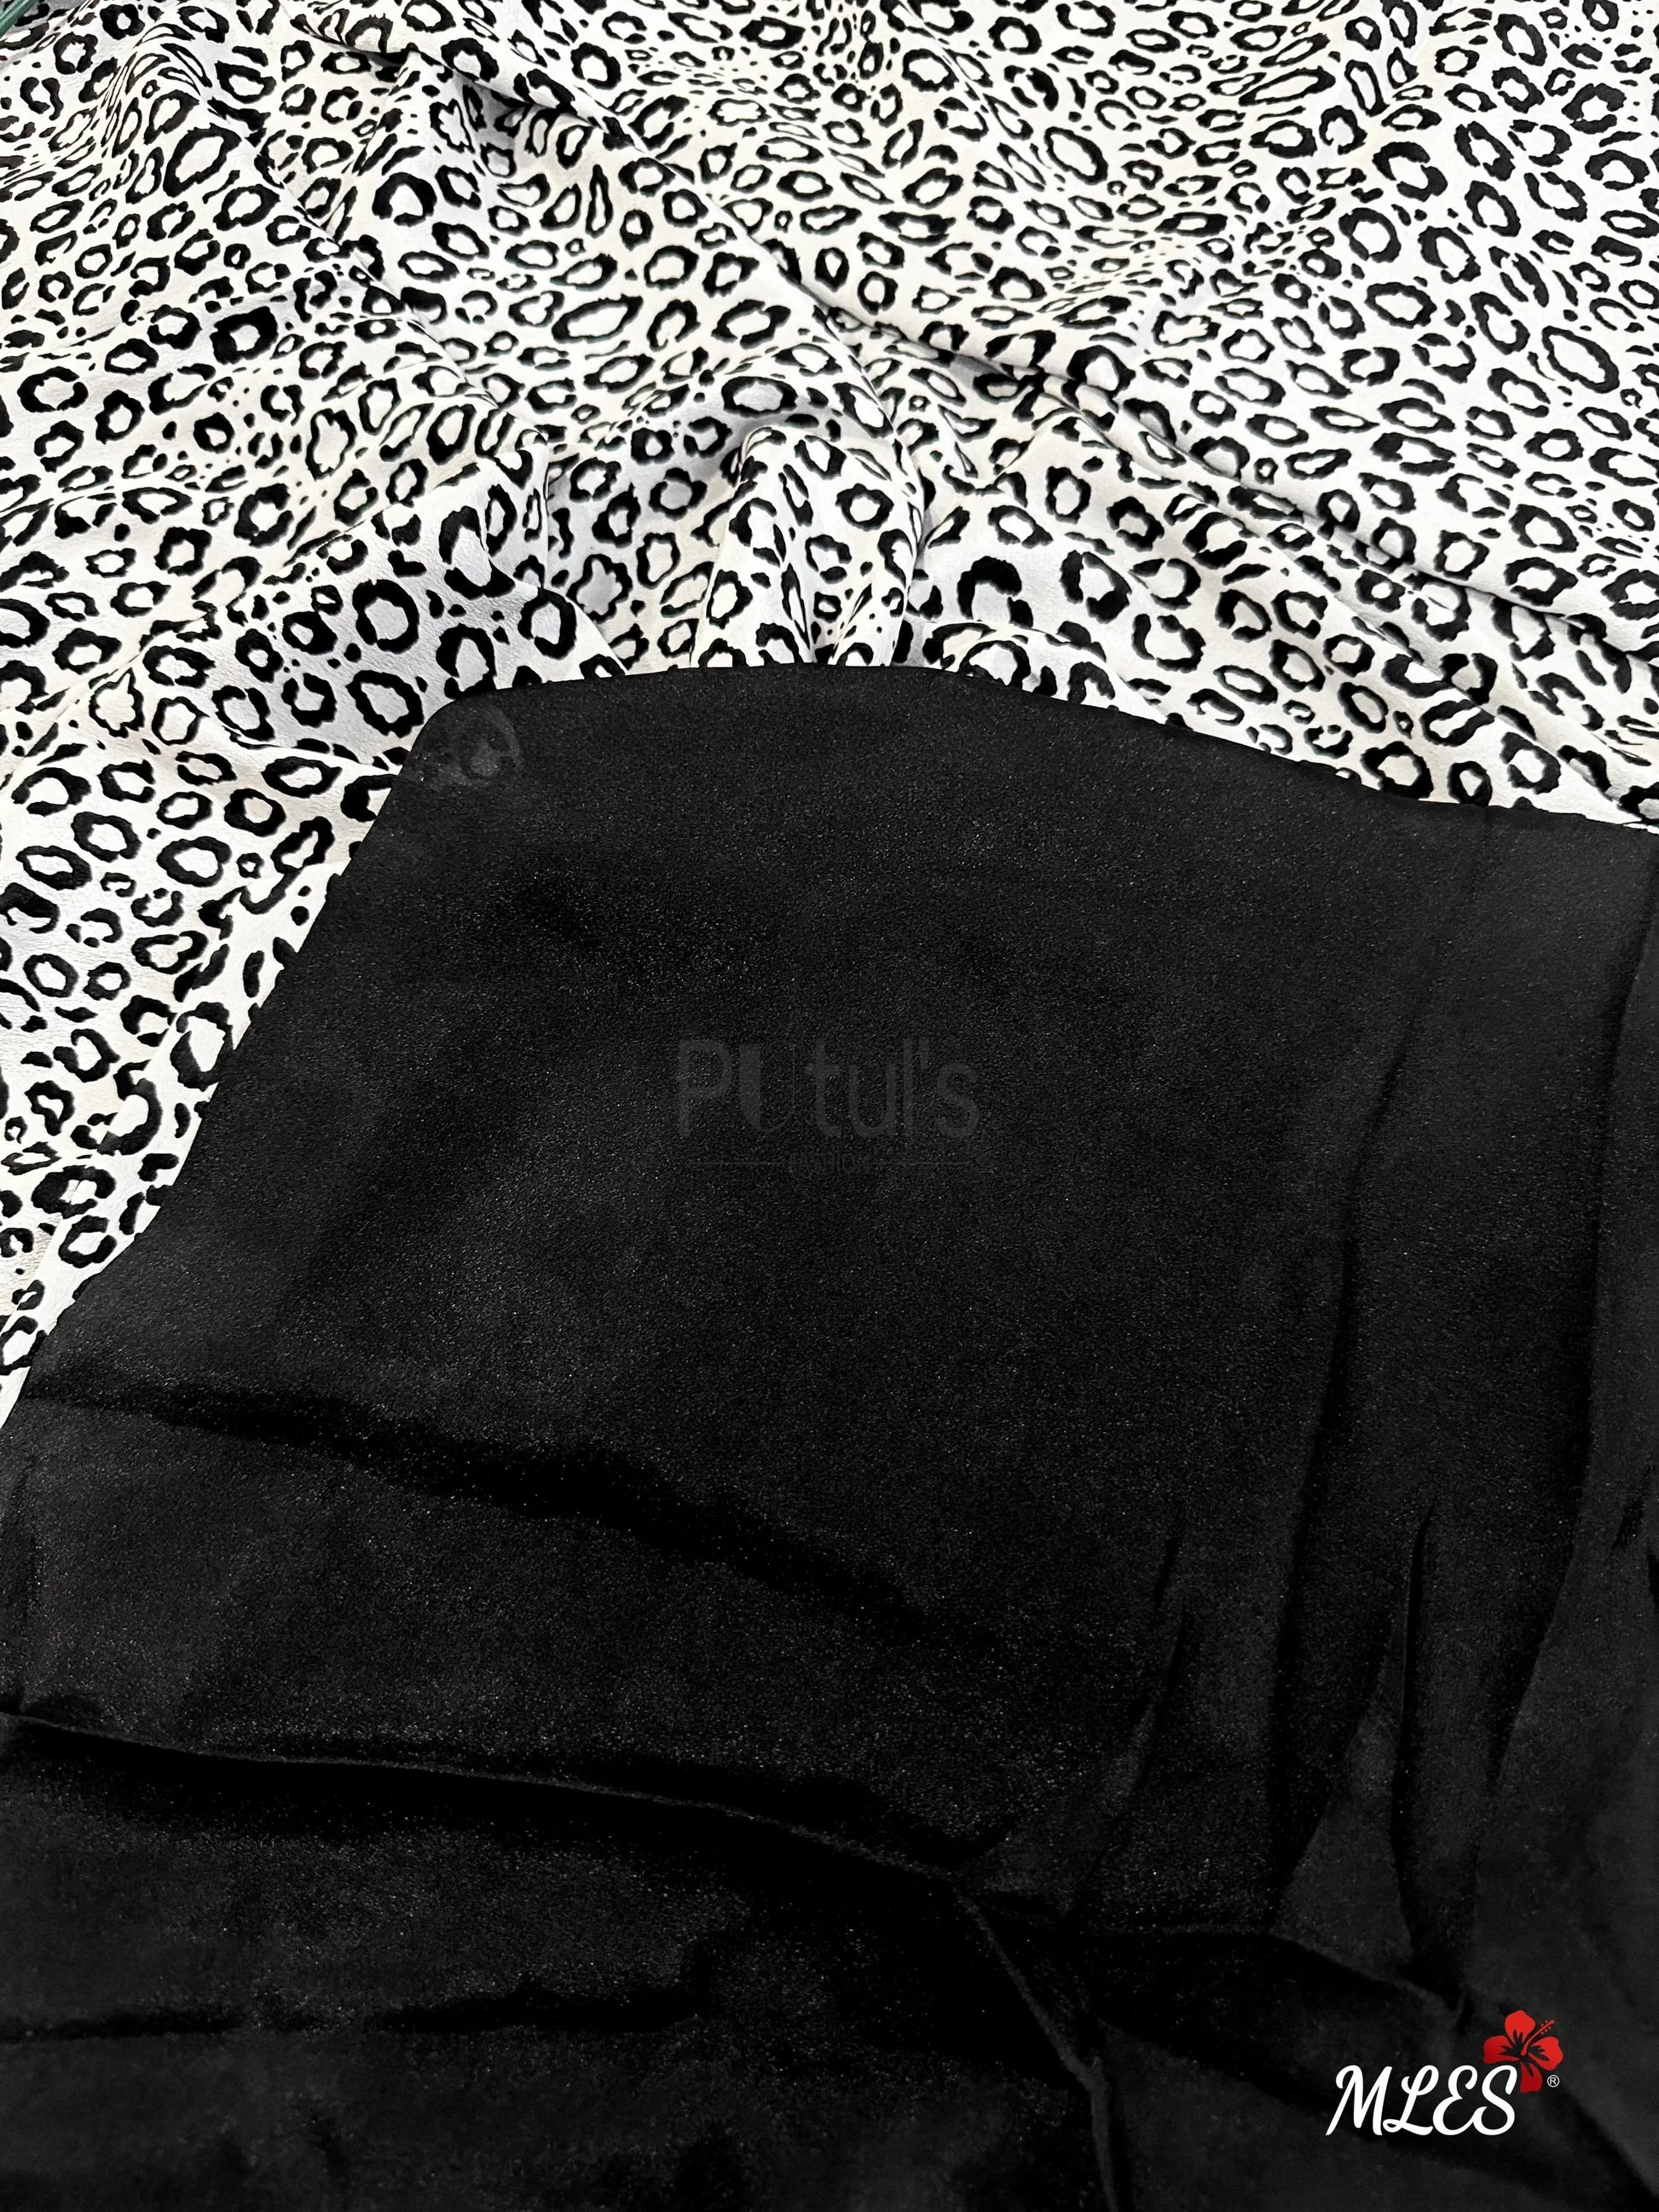 Black and white satin silk saree Putul's Fashion